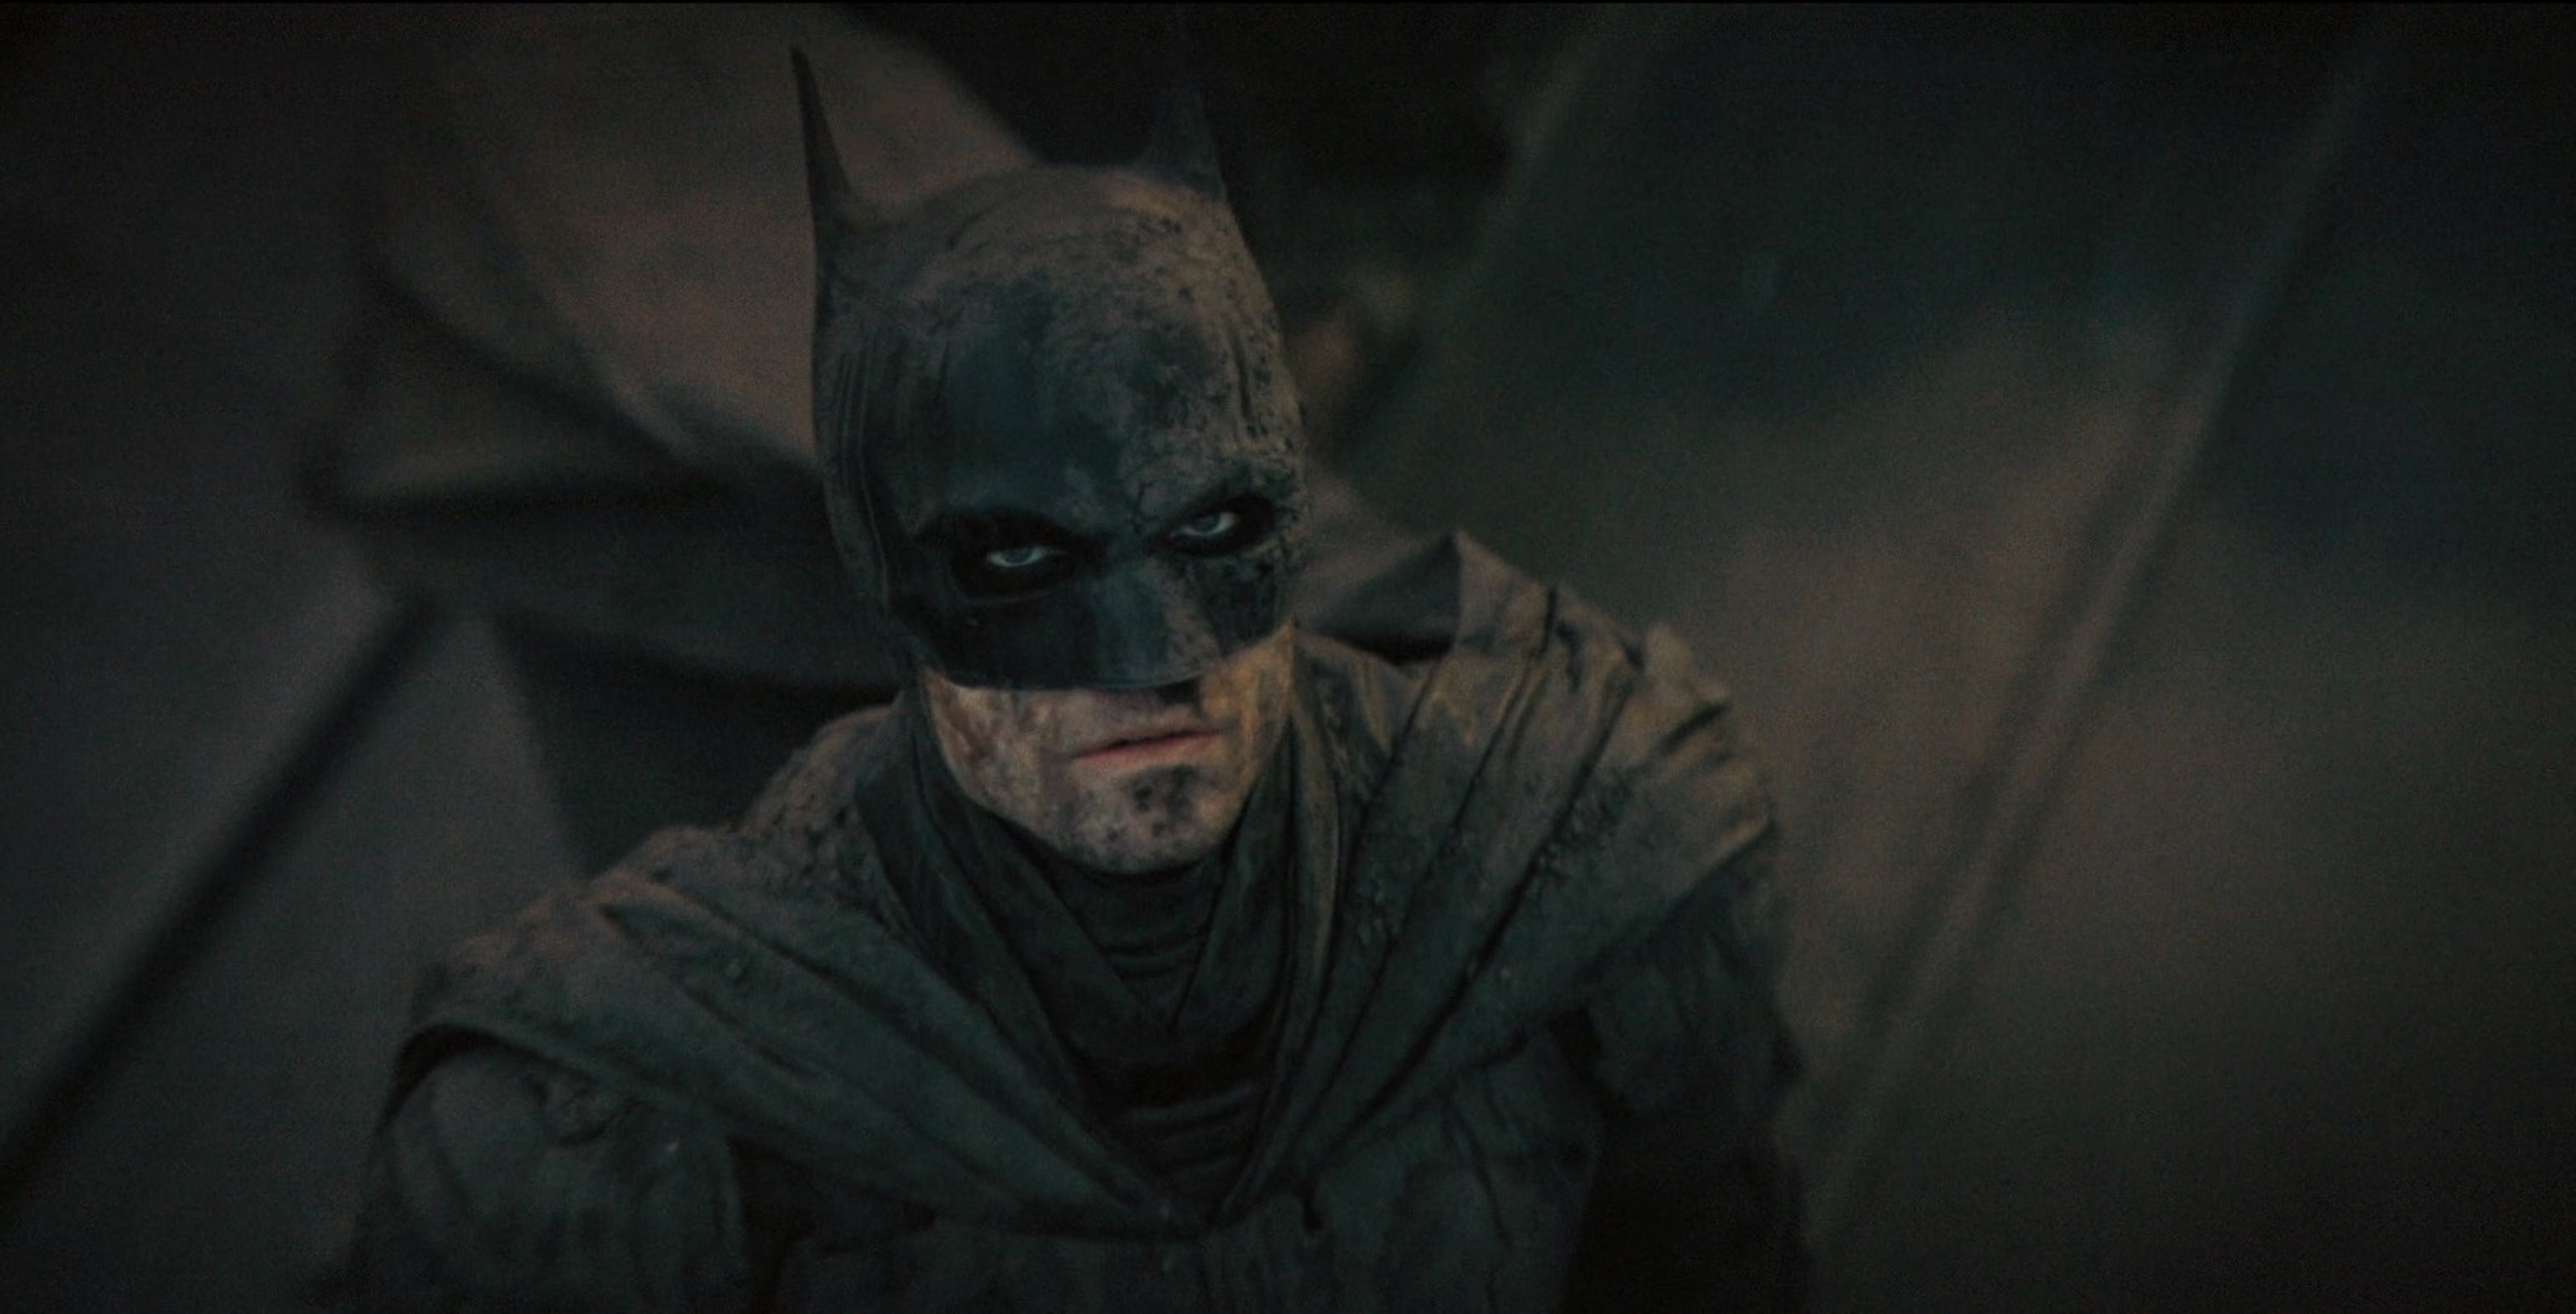 The Batman 2: i villain che vorremmo nel film di Matt Reeves